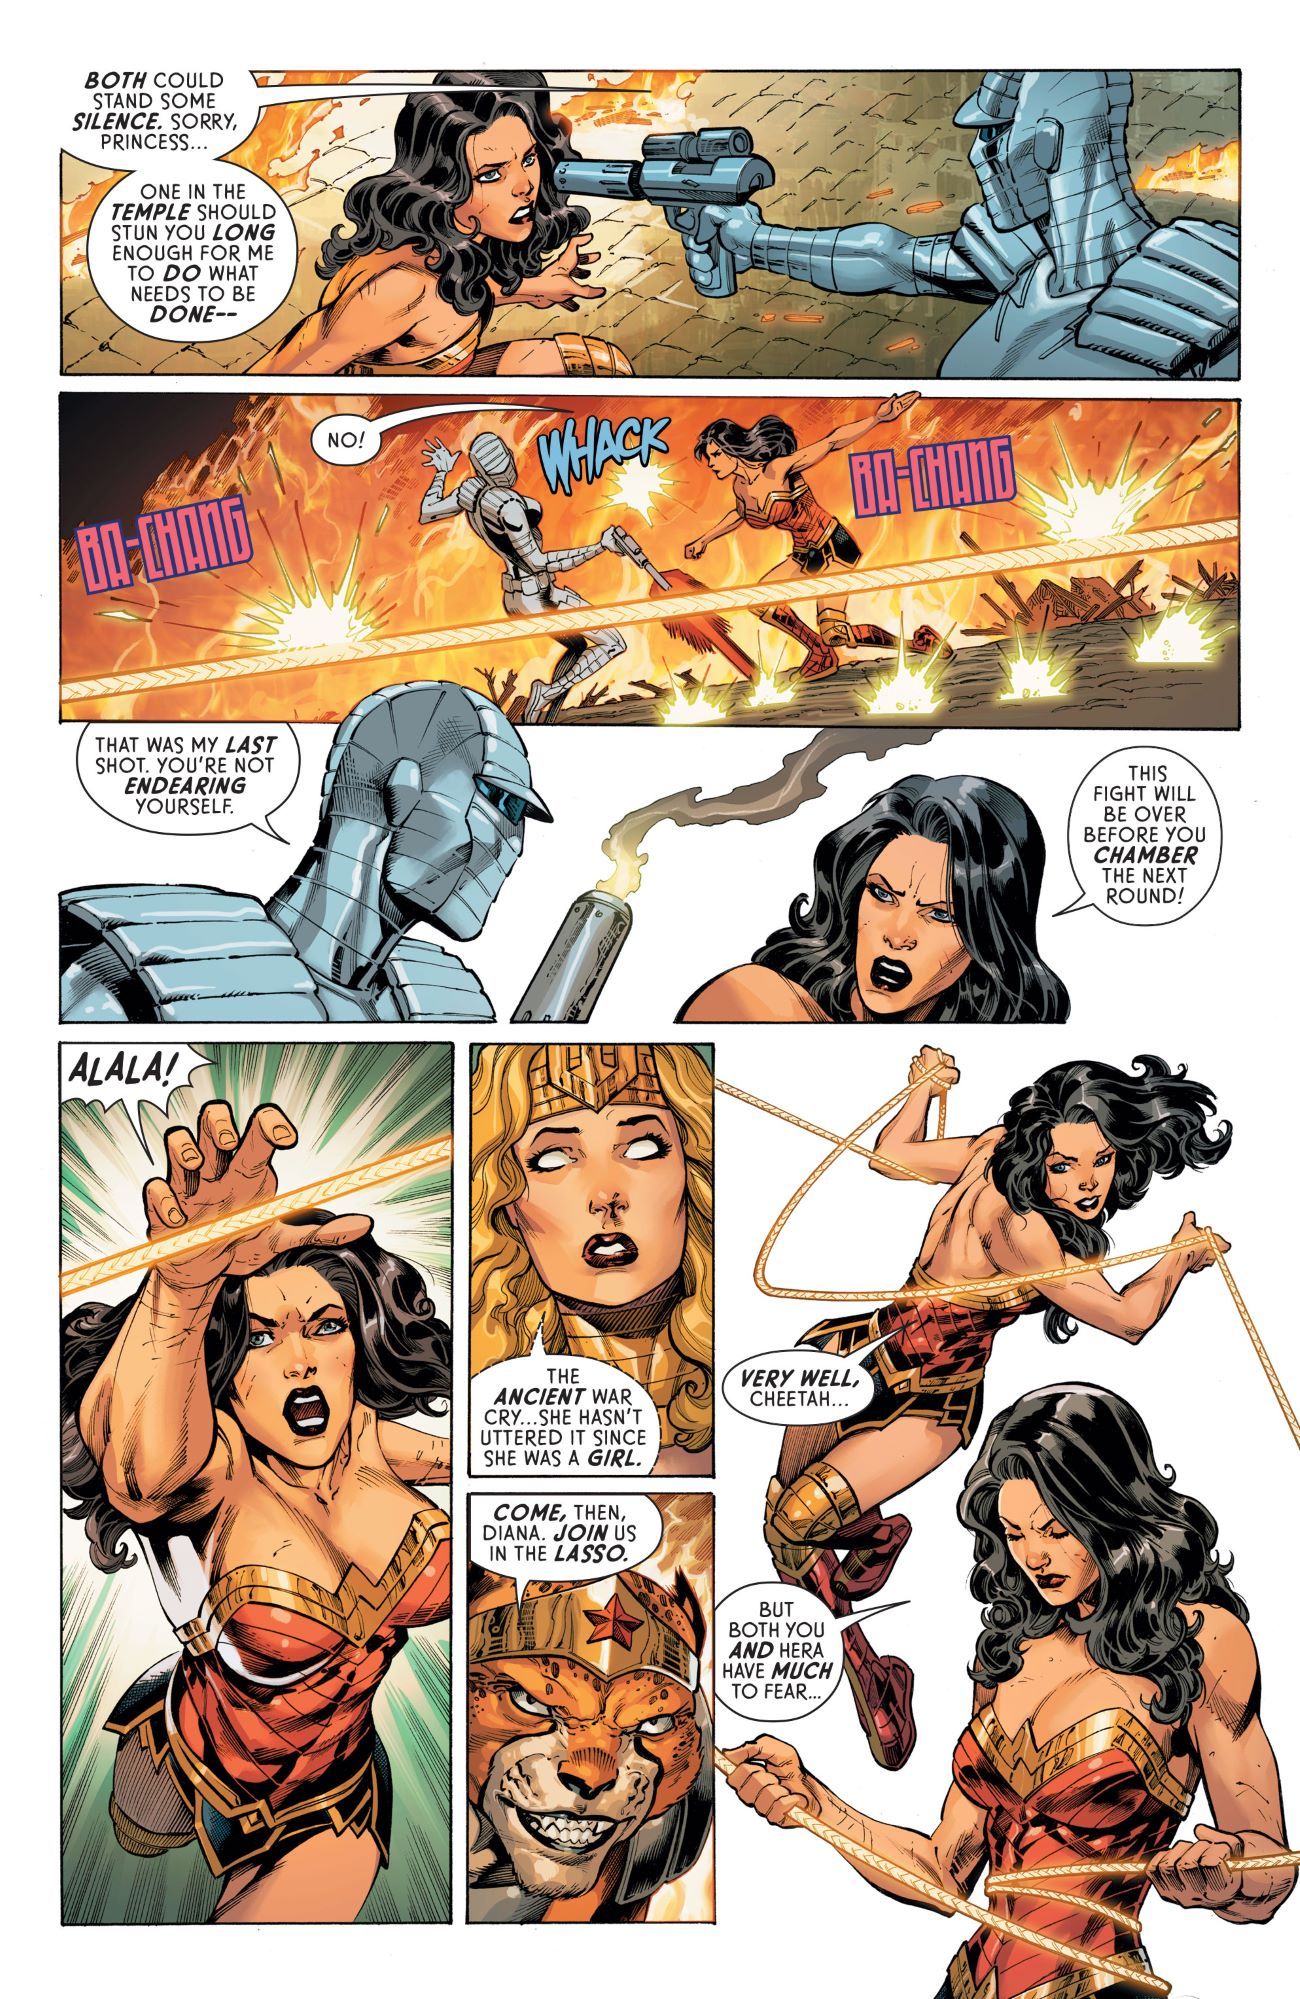 Wonder Woman 750 Comic Fight Preview